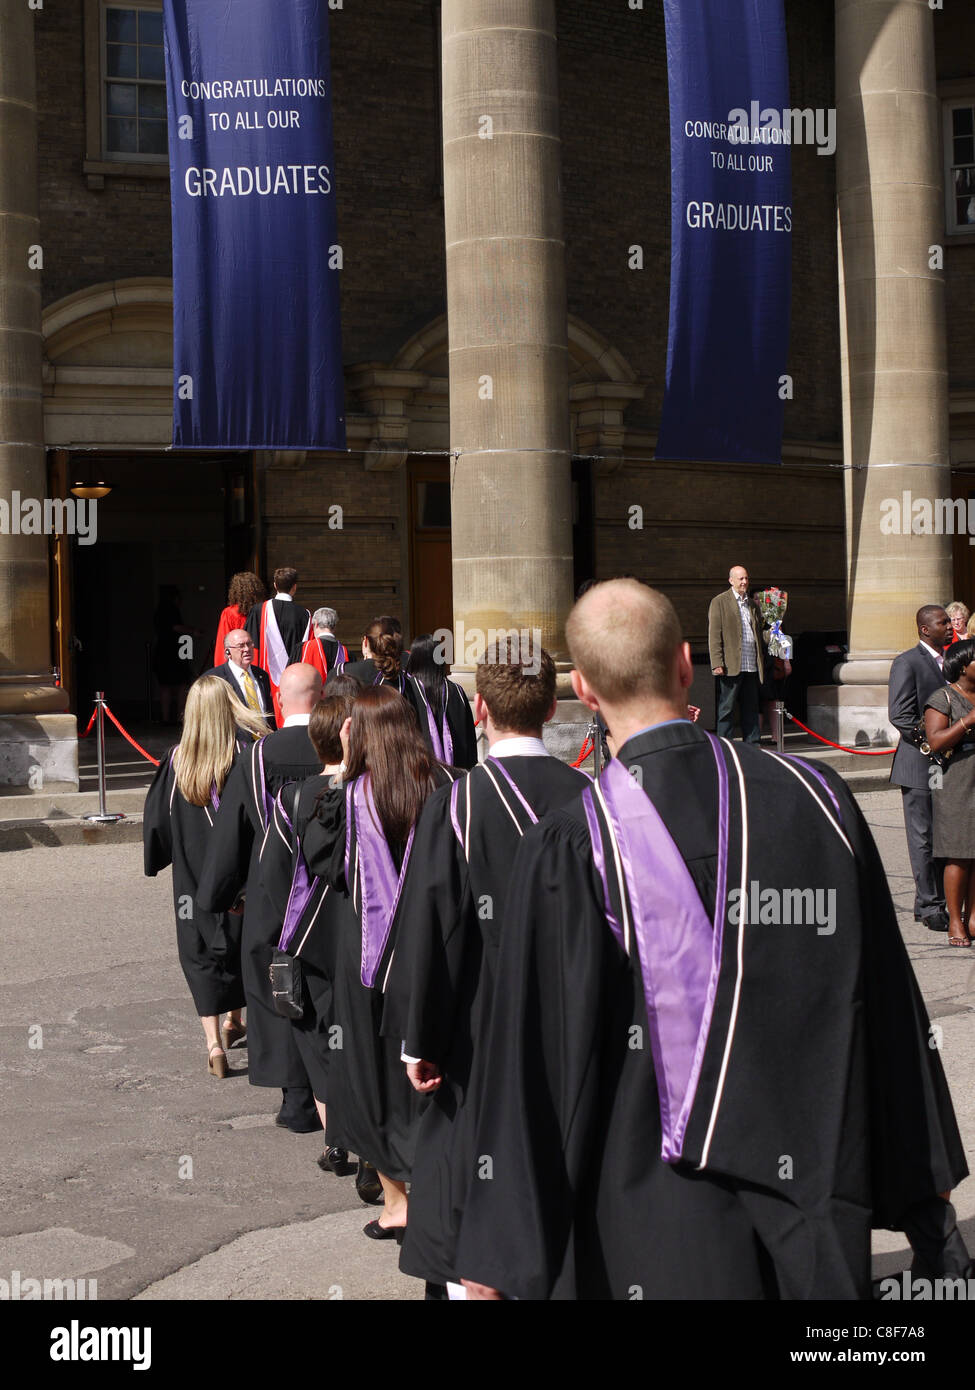 University Graduation Procession, University of Toronto Convocation Hall Stock Photo